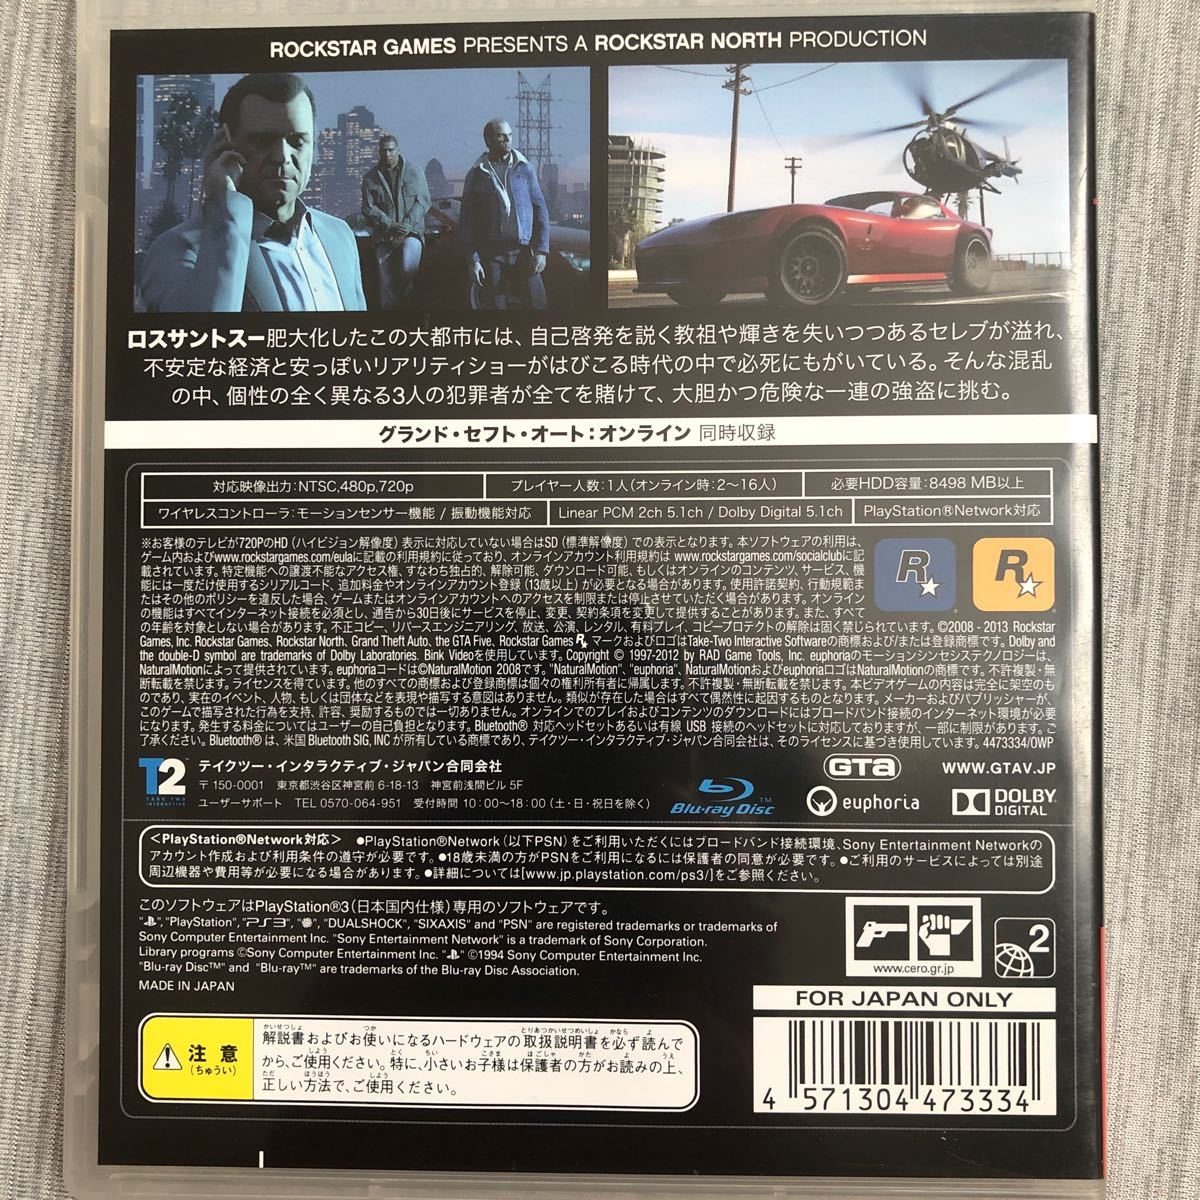 【PS3】 グランド・セフト・オートV Grand Theft Auto V